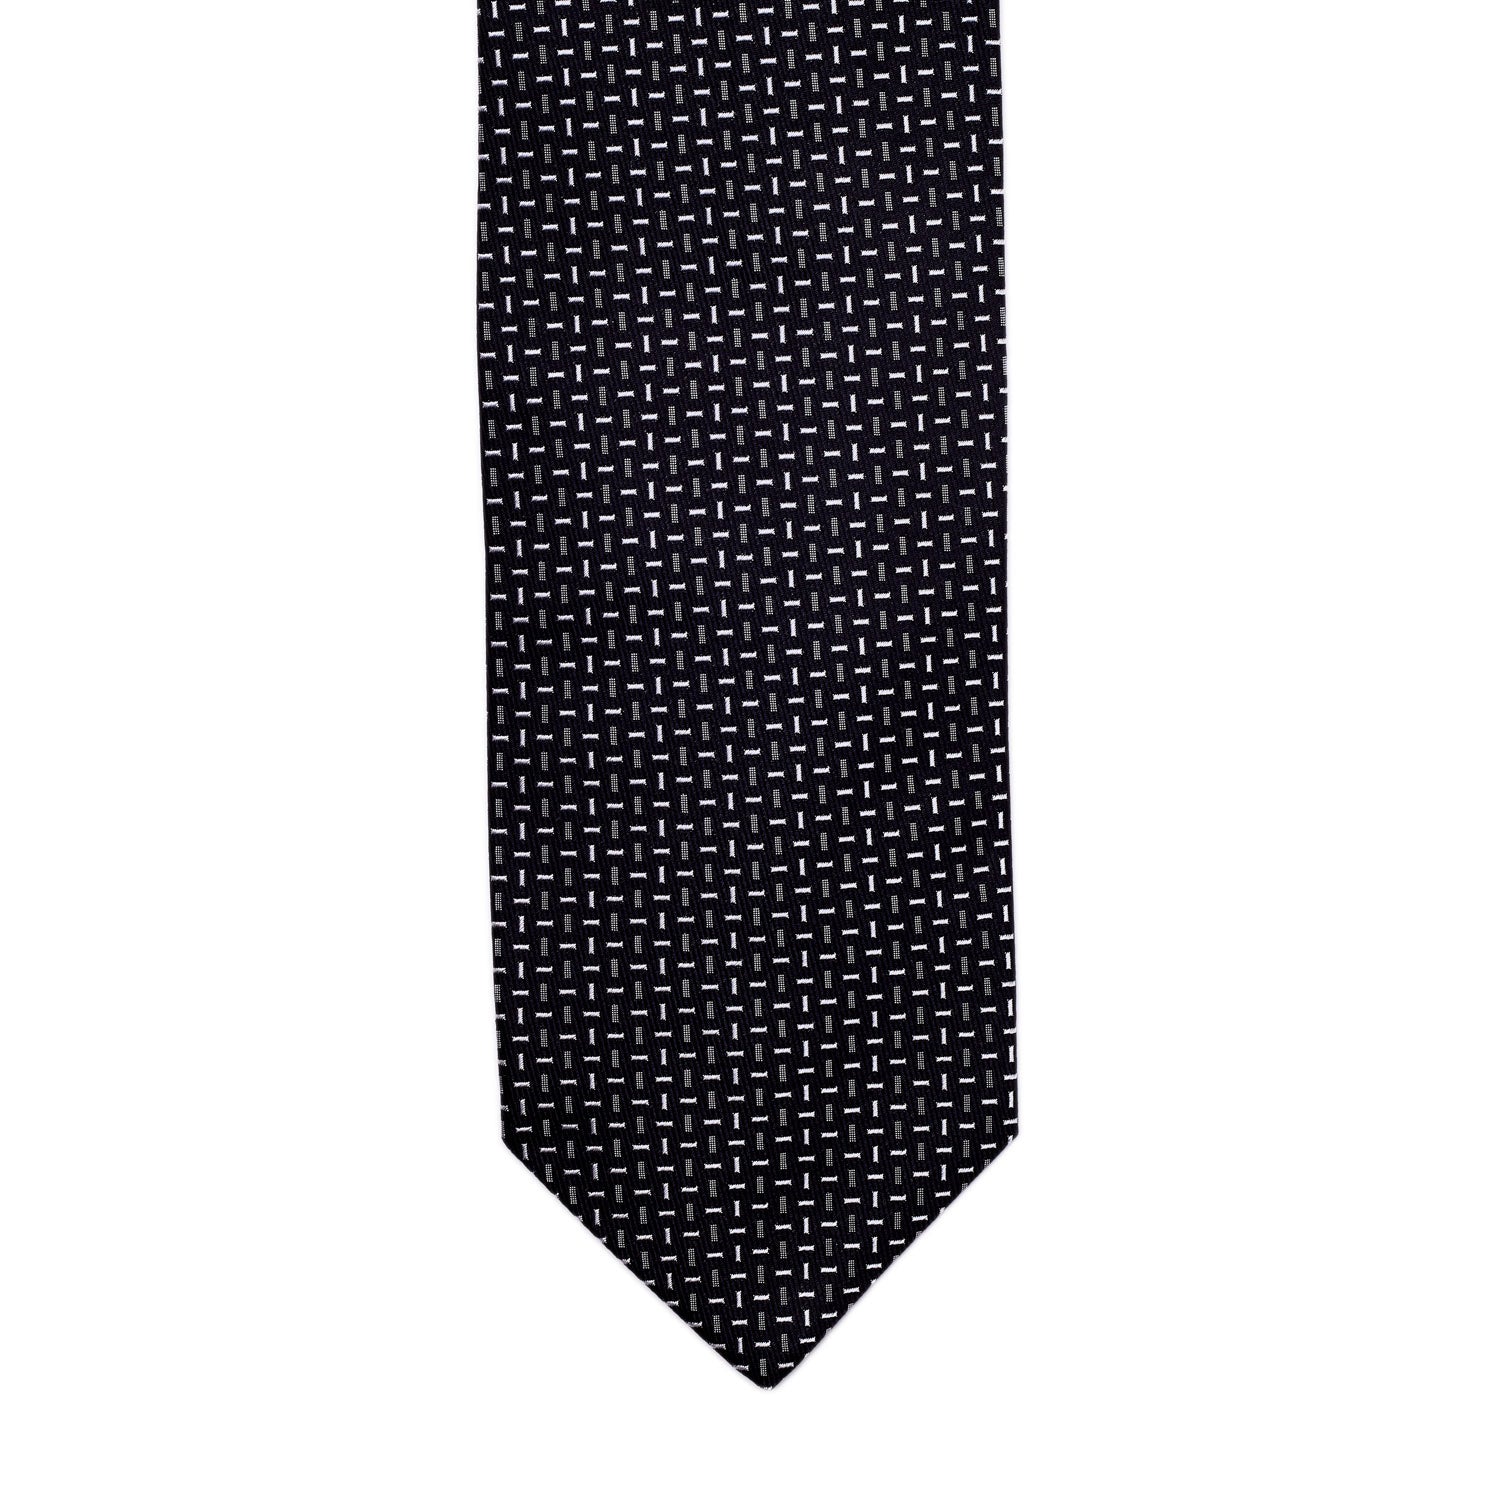 Handmade Sovereign Grade Cross-Bar Jacquard tie by KirbyAllison.com.